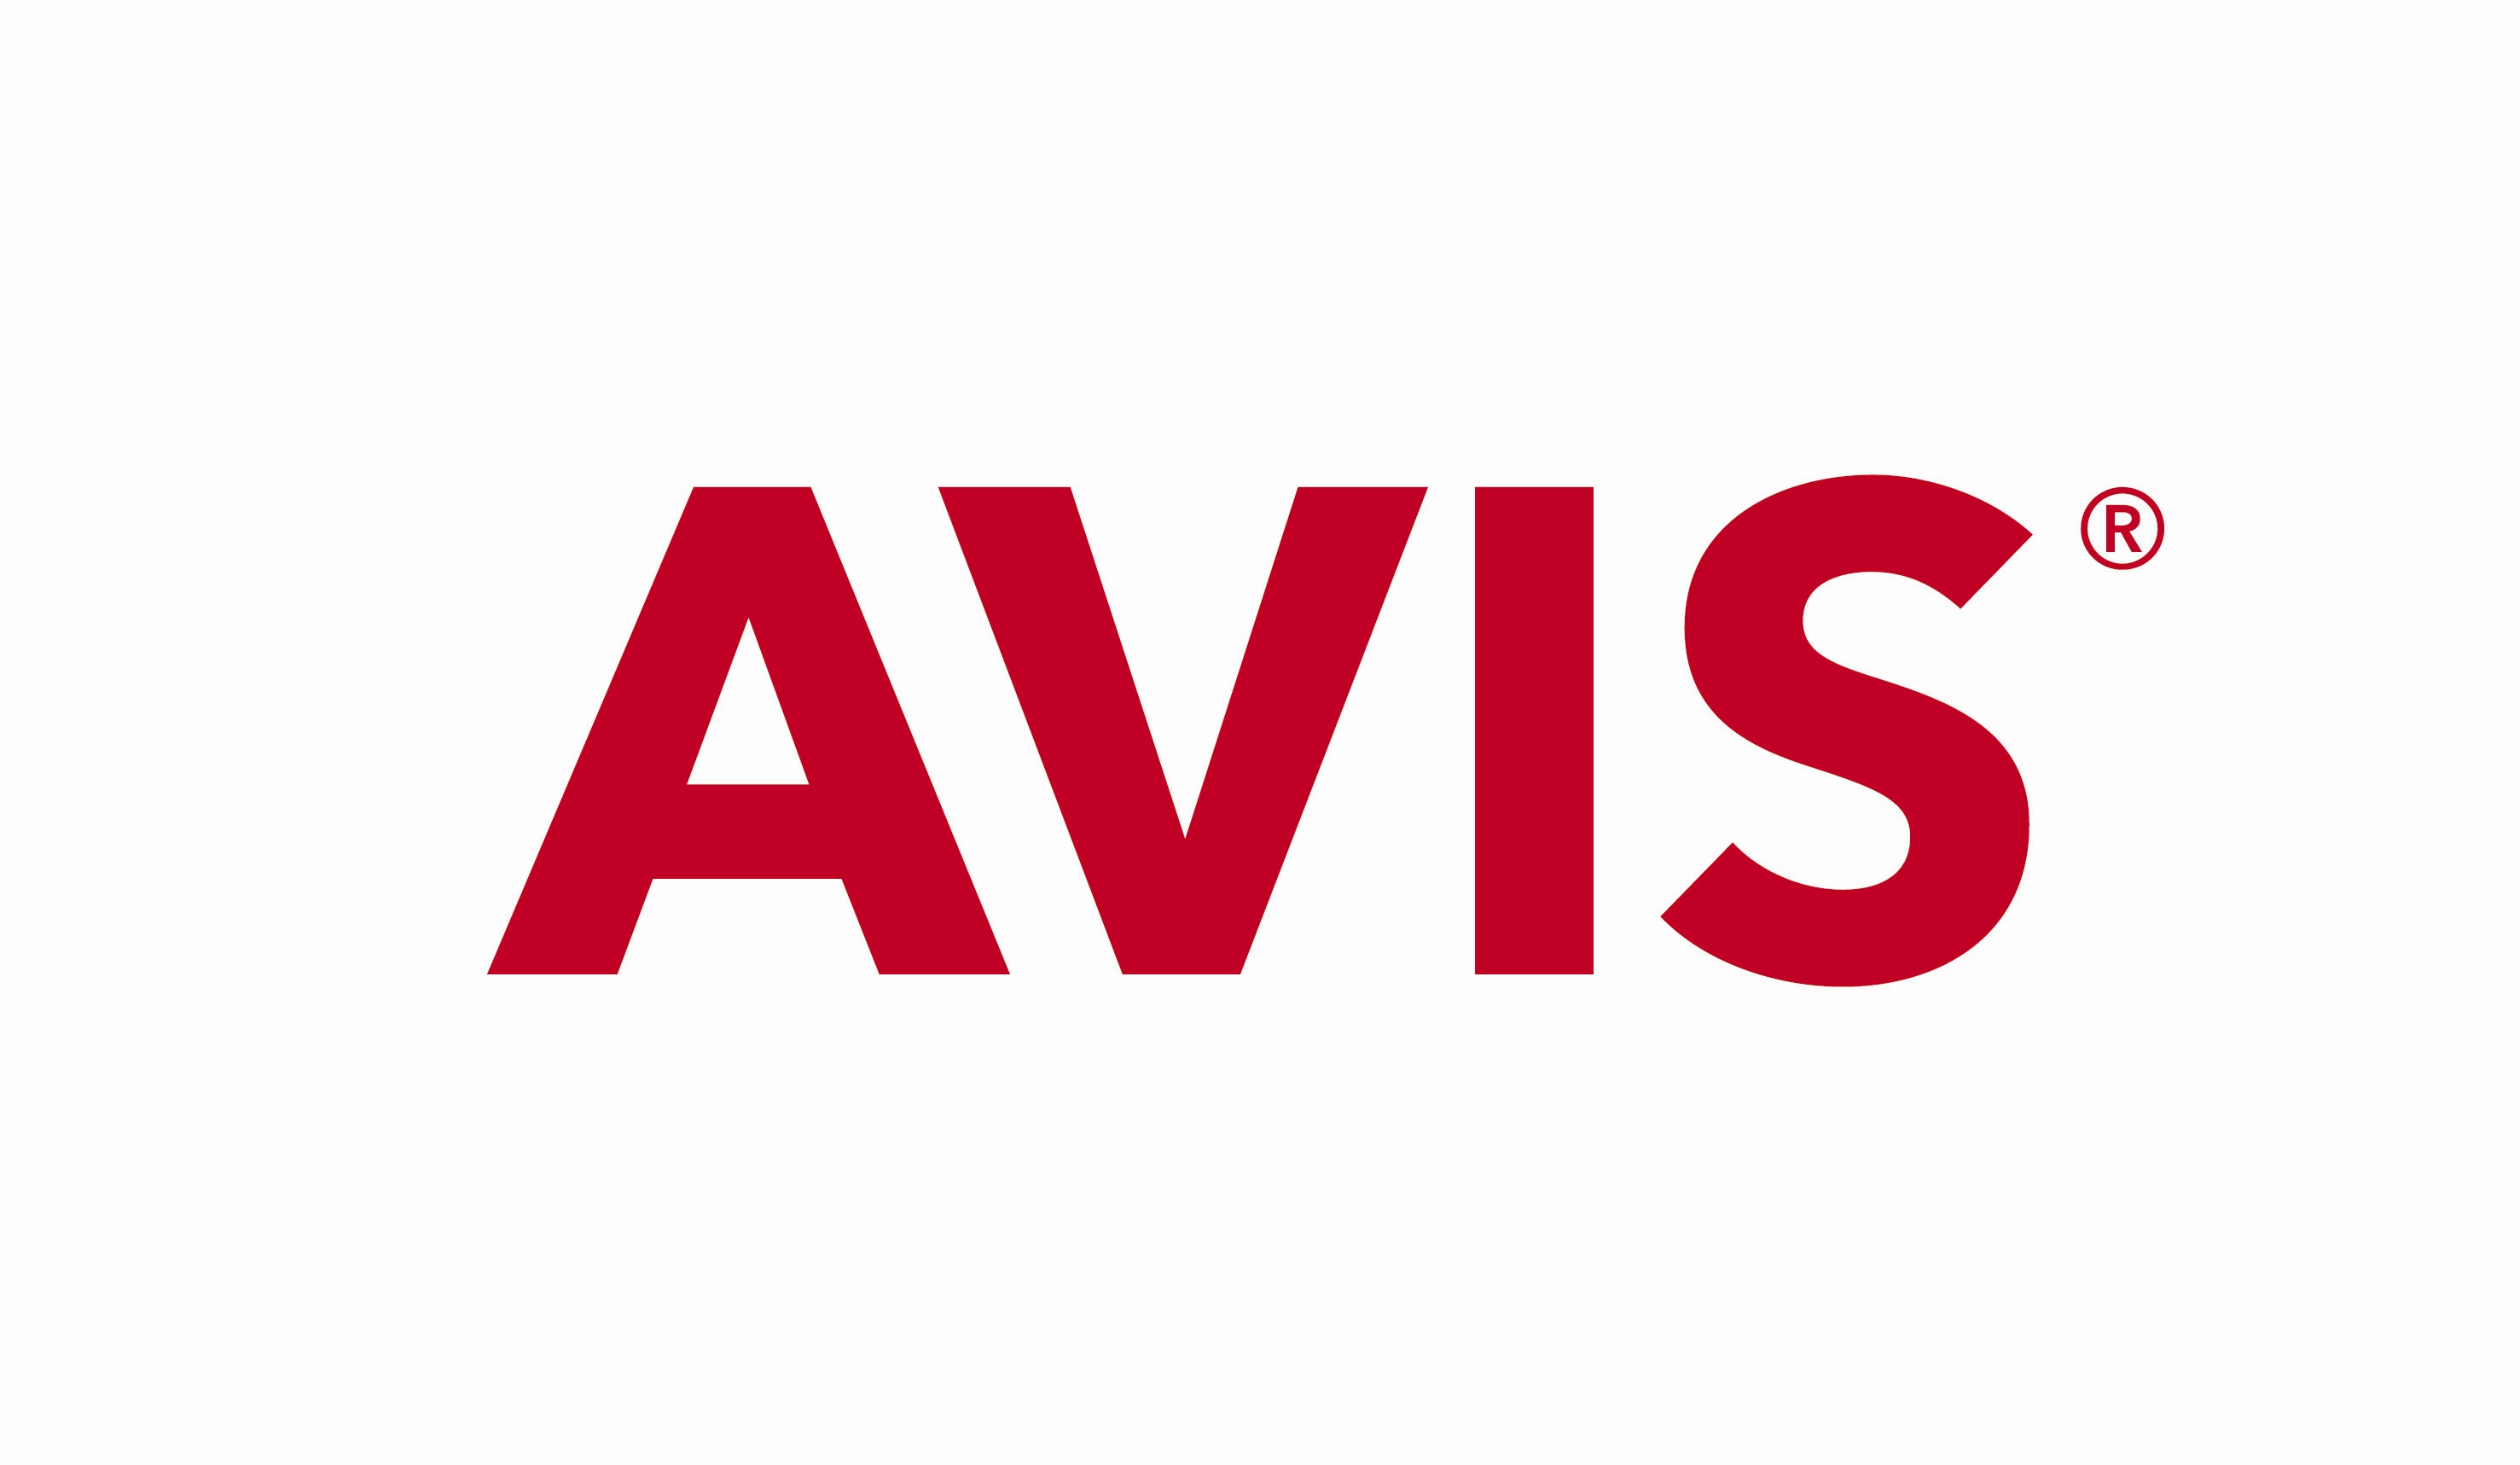 File:AVIS logo 2012.png